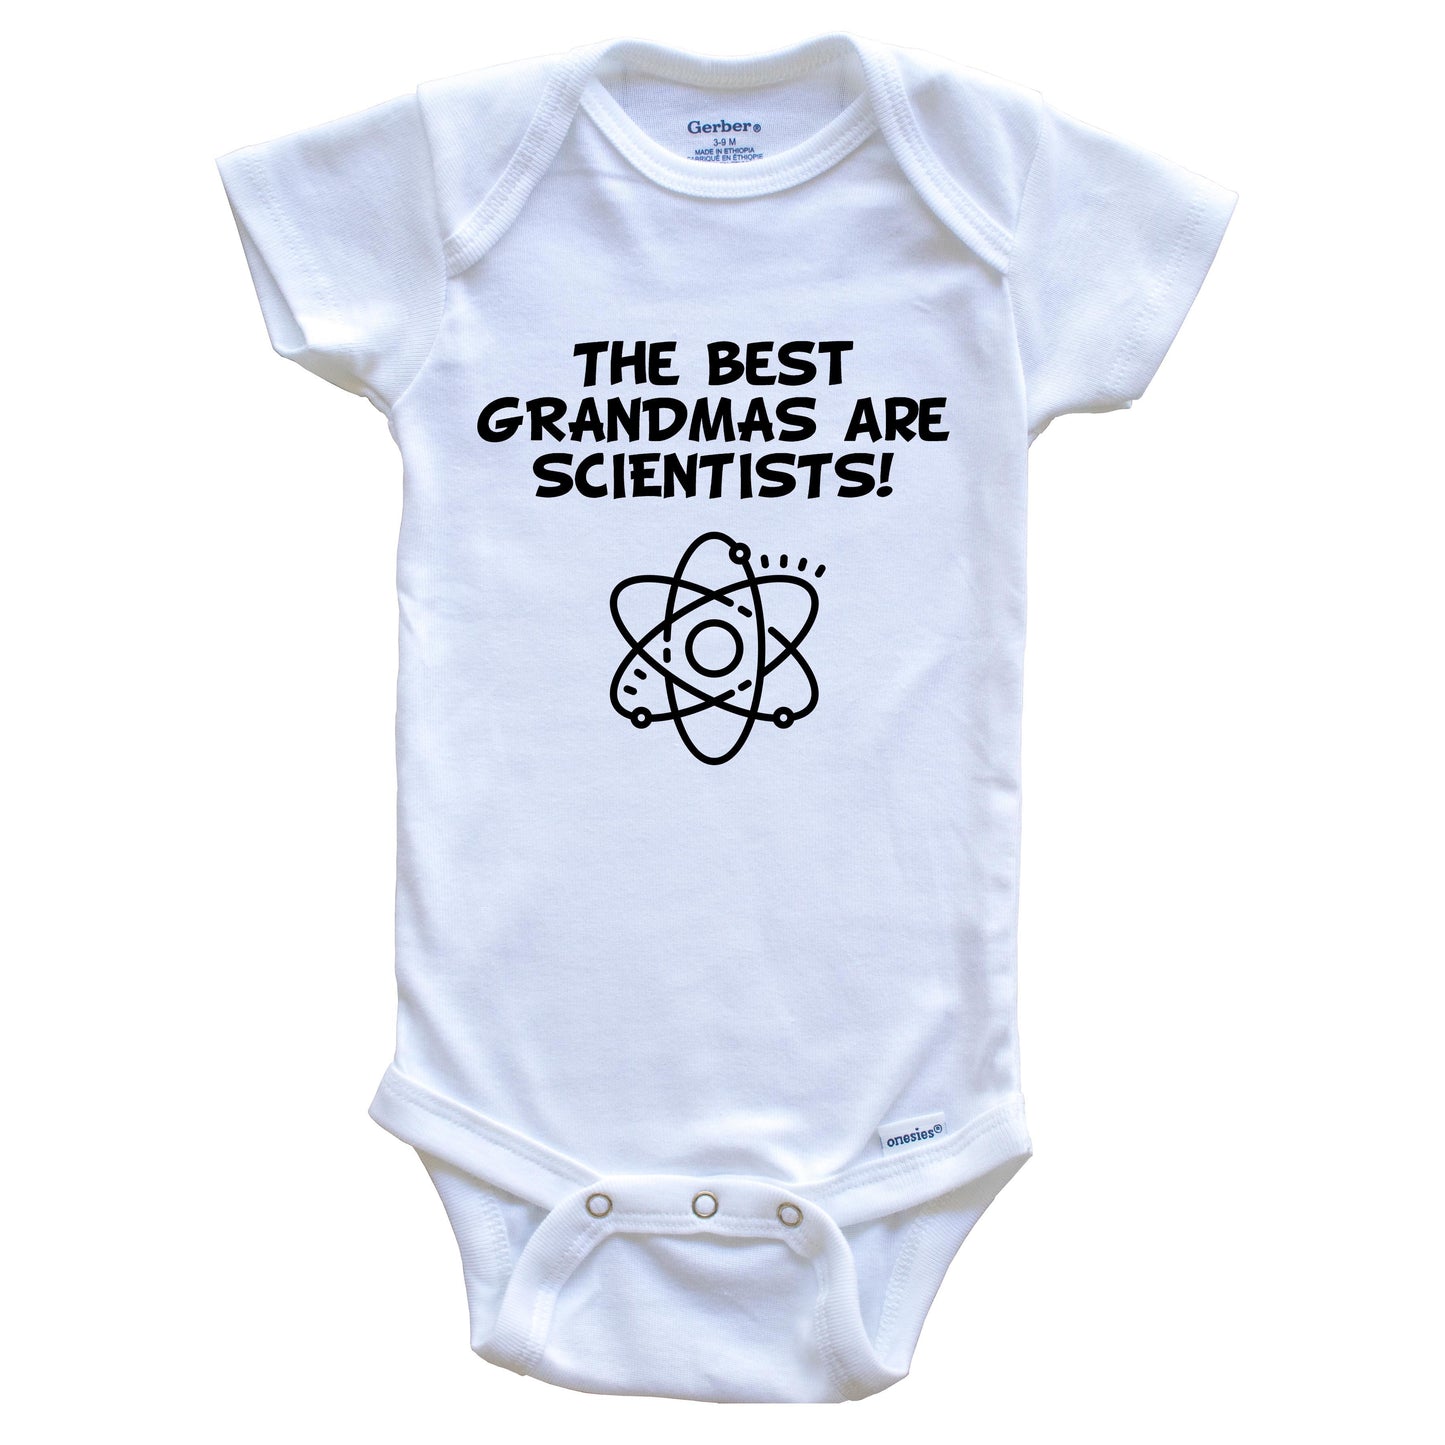 The Best Grandmas Are Scientists Funny Grandchild Baby Onesie